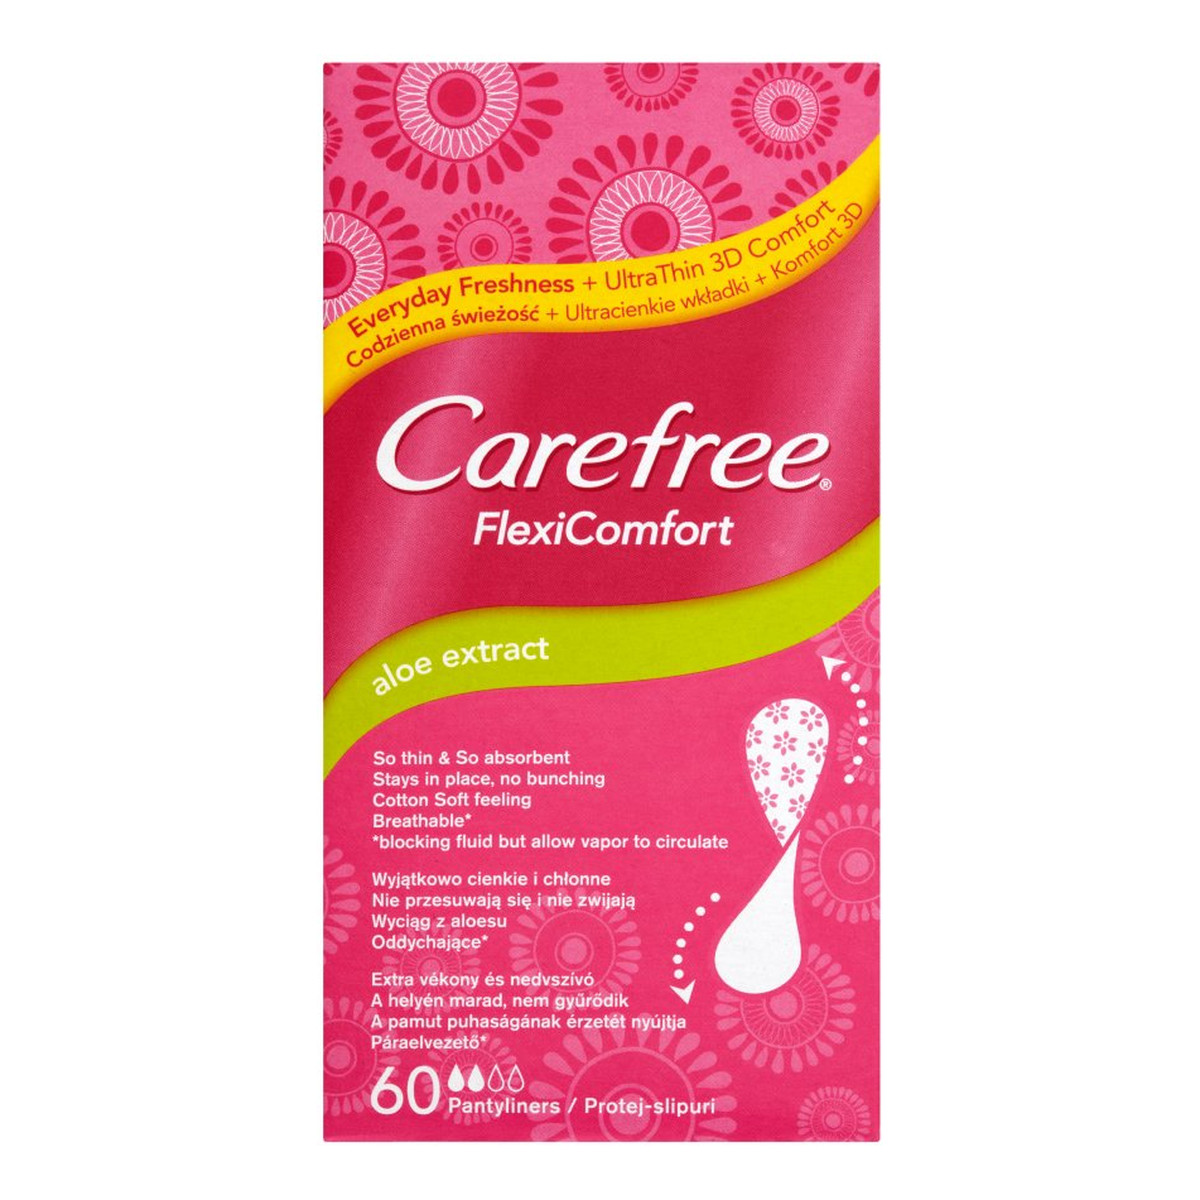 Carefree Flexi Comfort Aloe Extract Wkładki higieniczne 60szt.